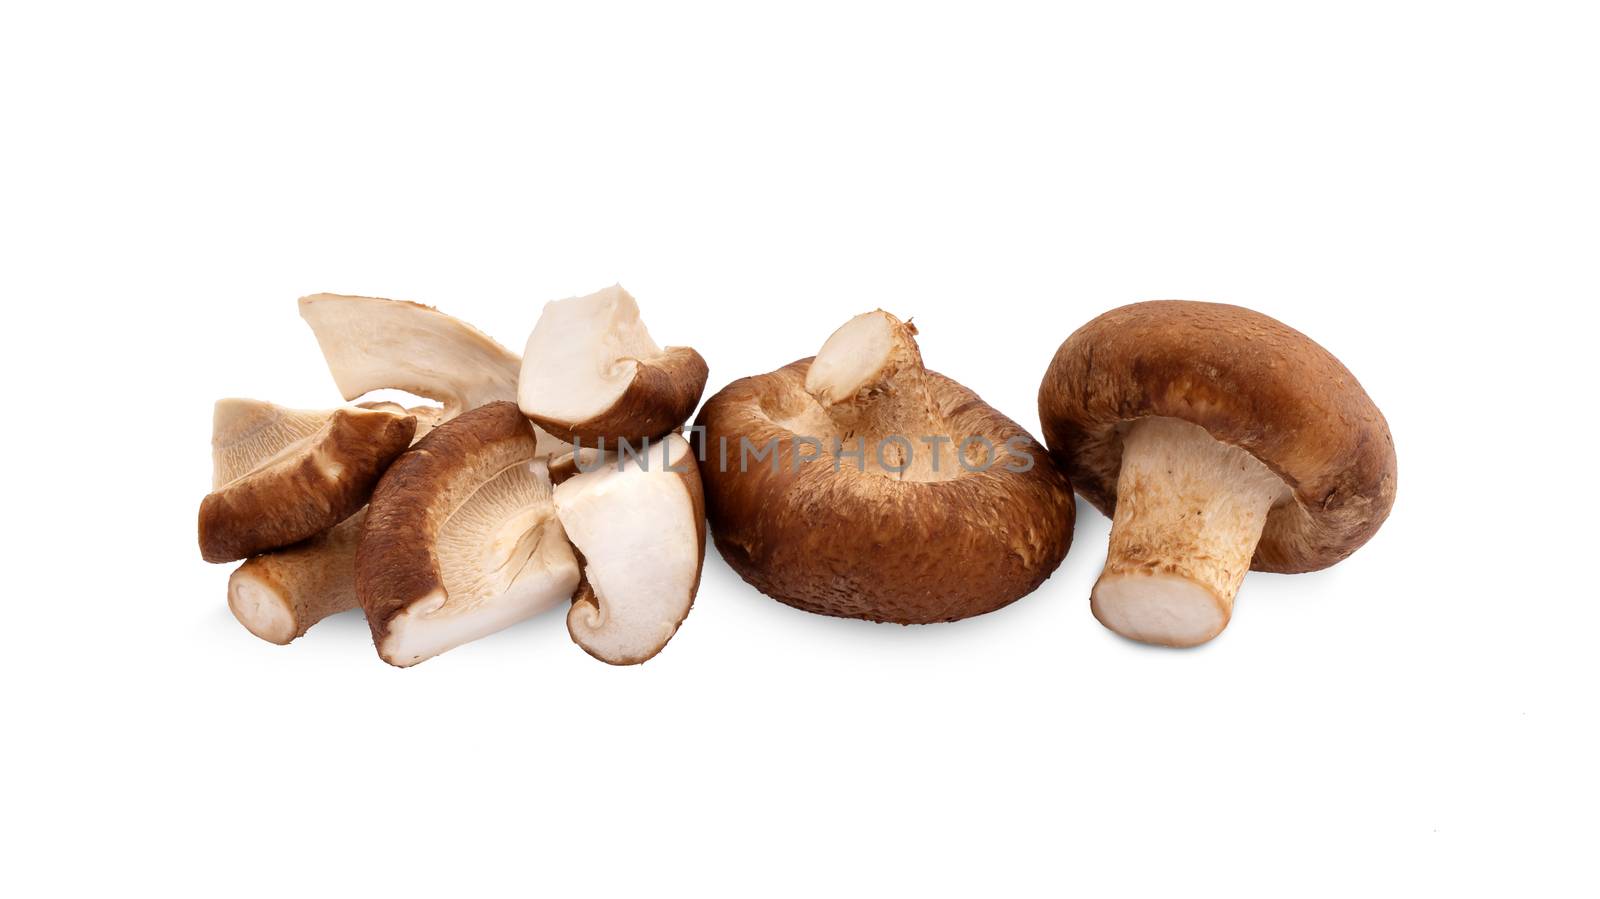 Shiitake mushroom on the White background  by freedomnaruk